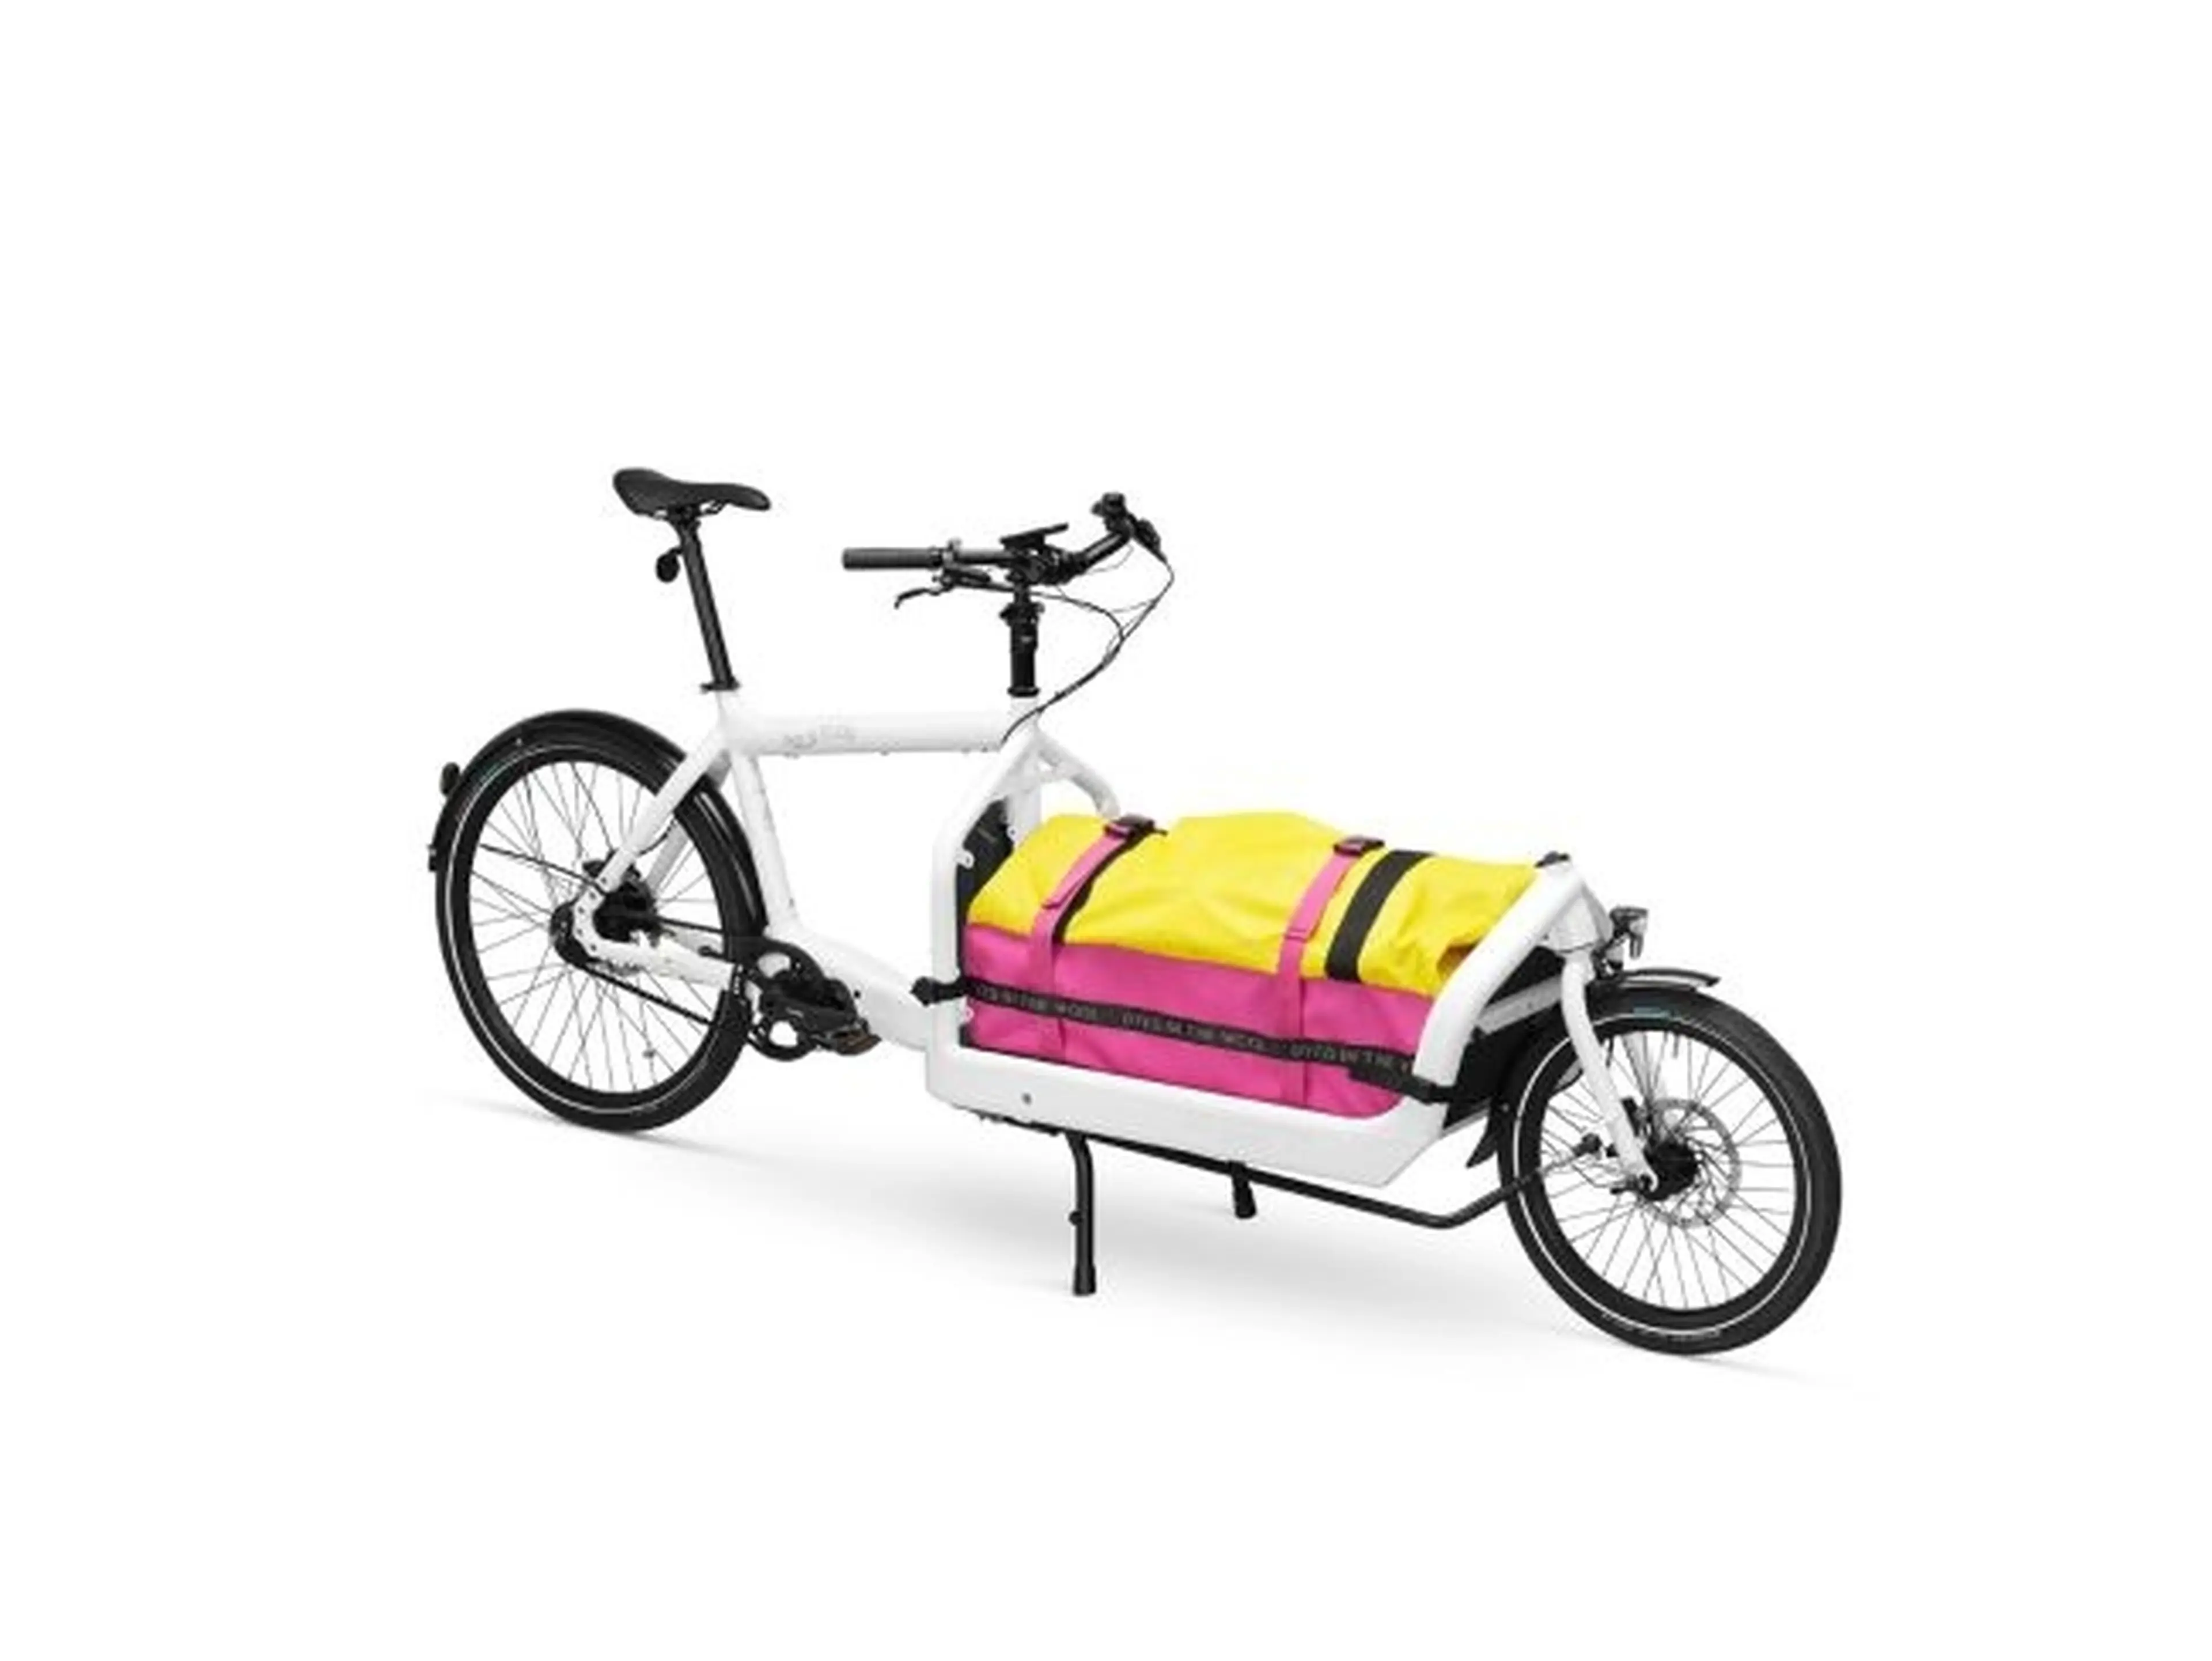 9. Larry vs harry, E Bullitt, cargo bike,bicicleta cargo. E6100 EP8